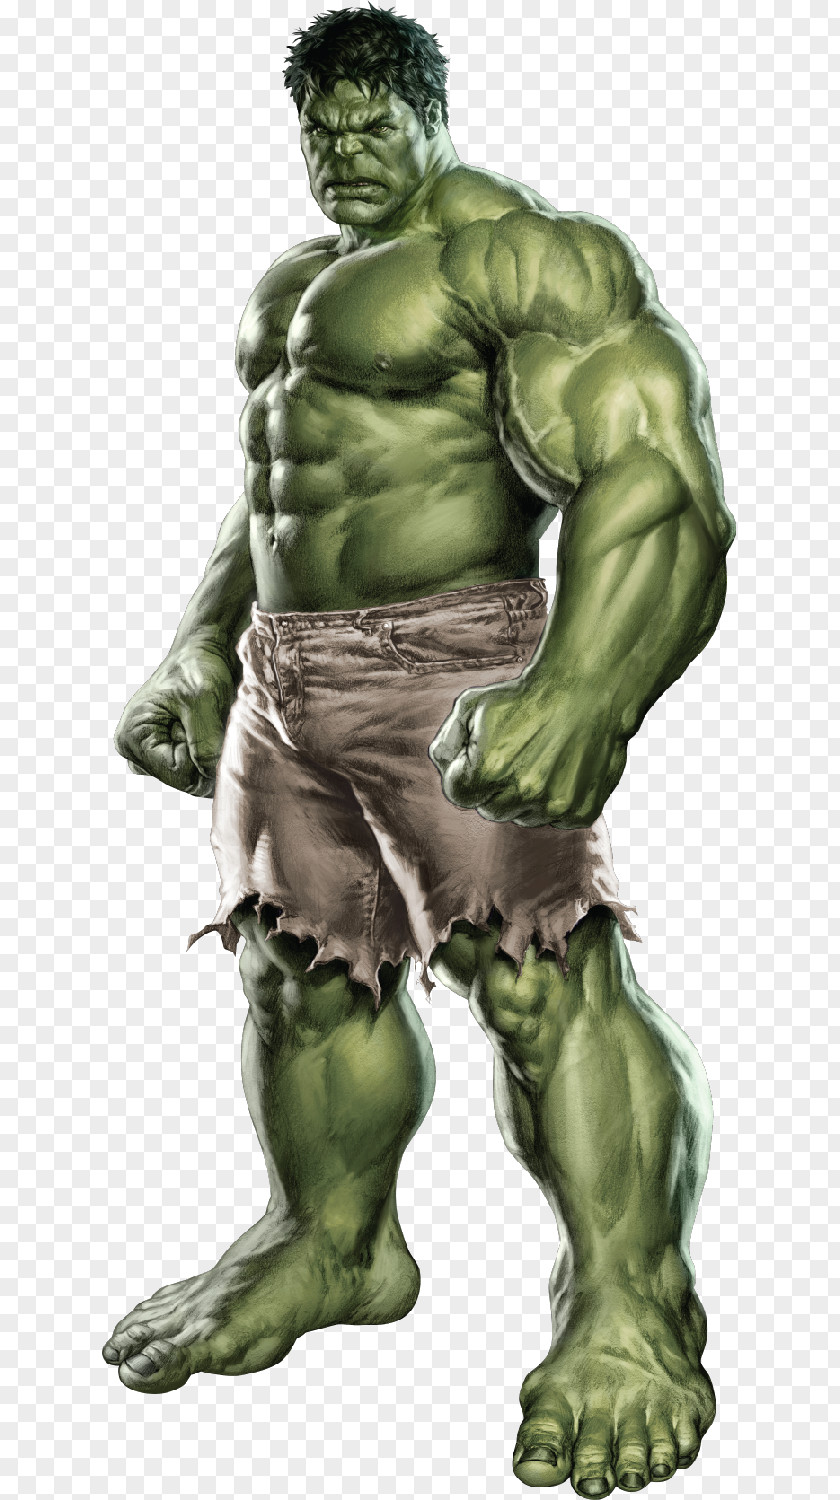 Hulk She-Hulk Captain America Marvel Cinematic Universe PNG